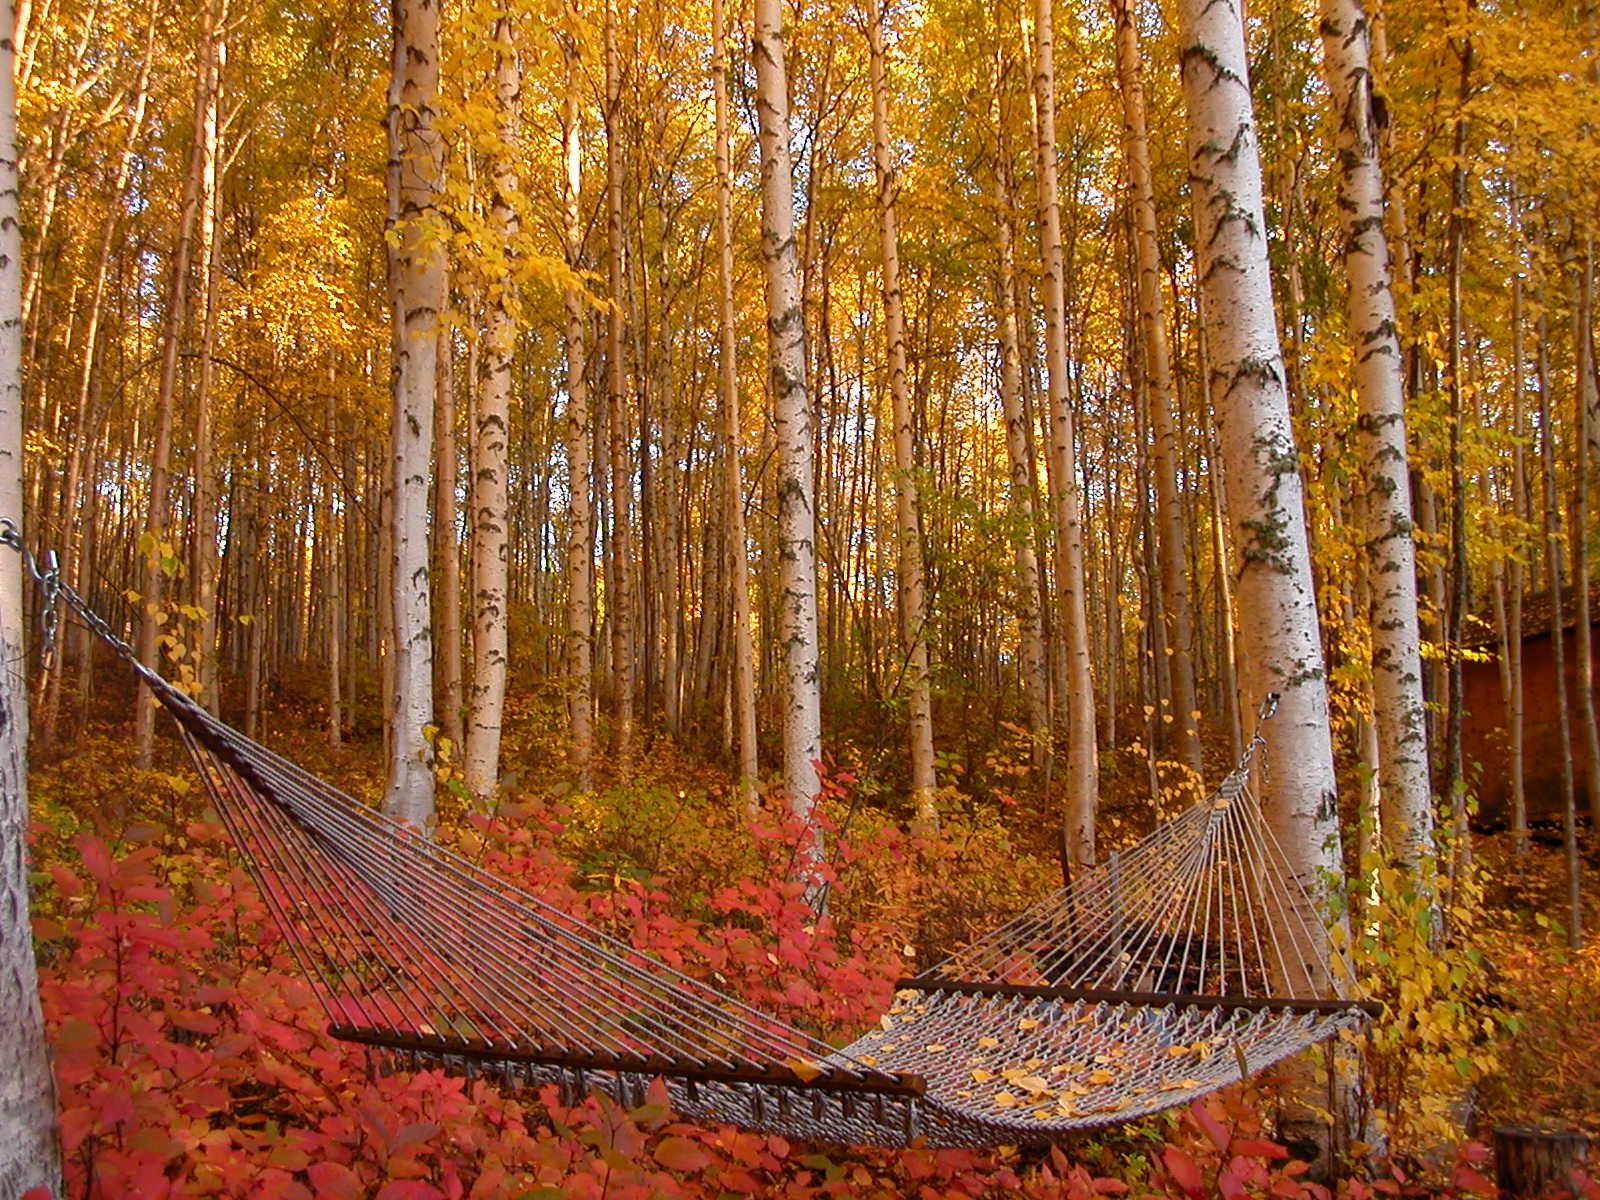 hammock in fall foliage